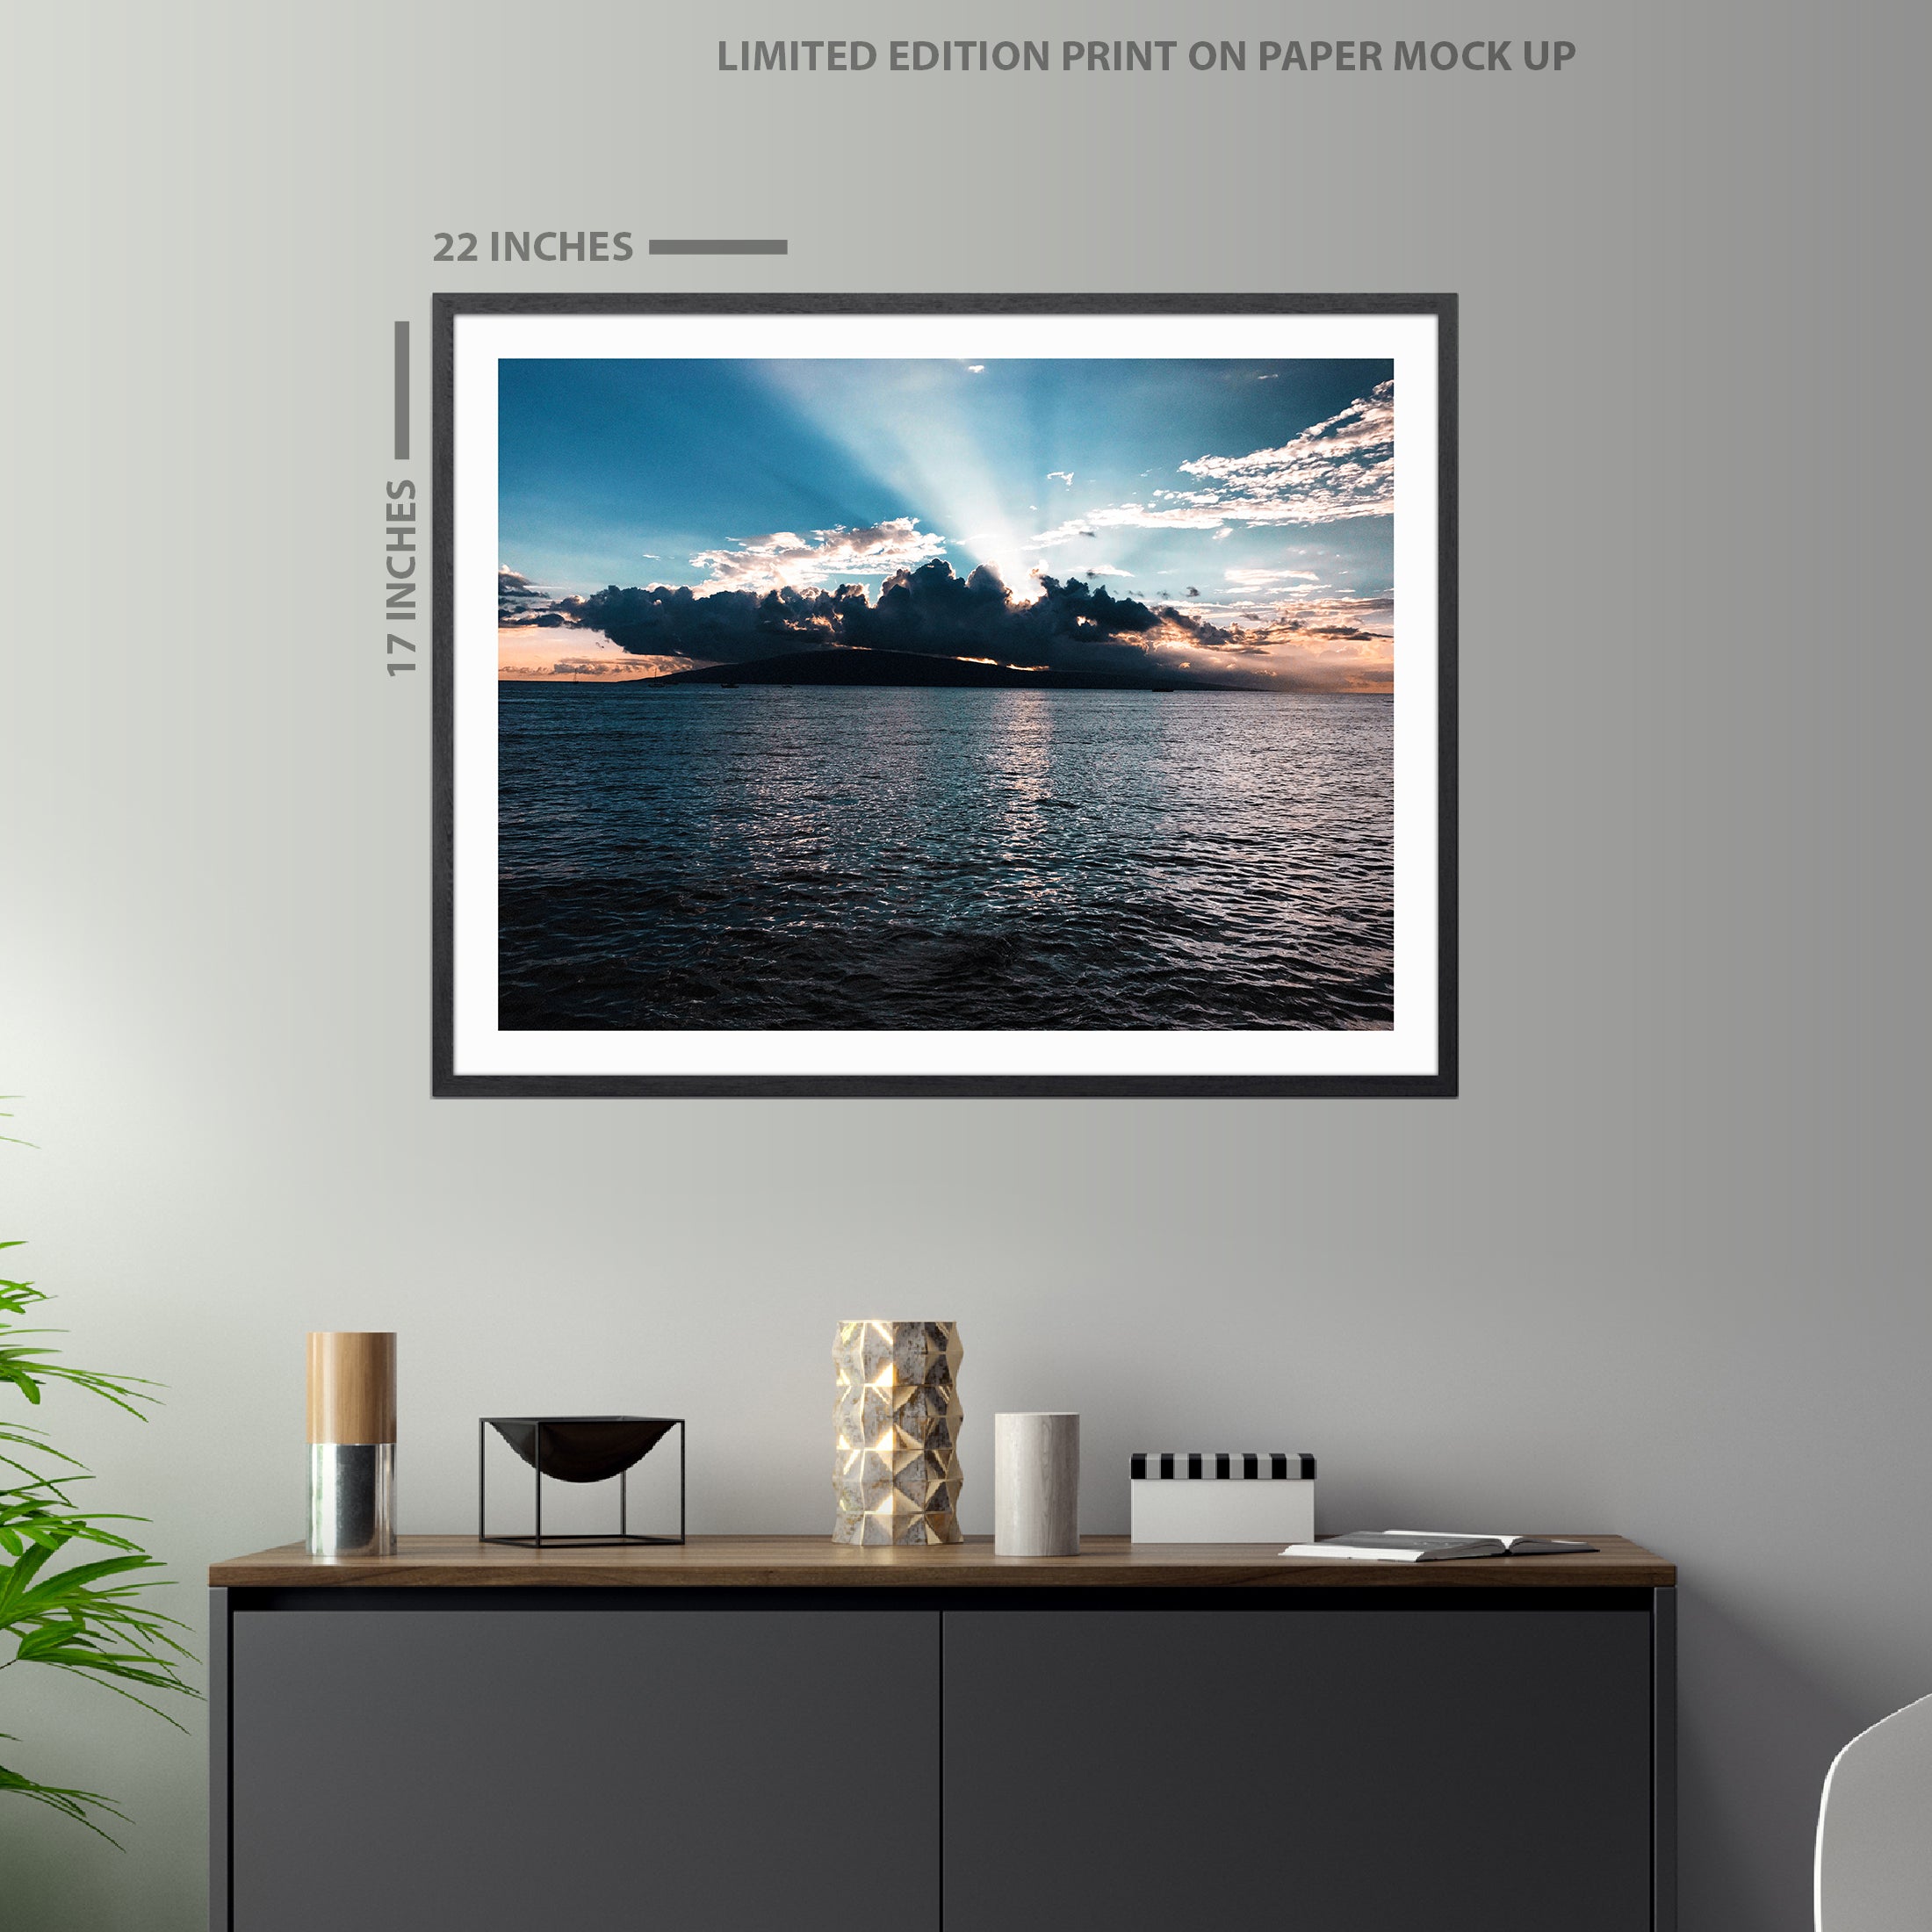 Maui Sunset 4.0, Limited Edition Print